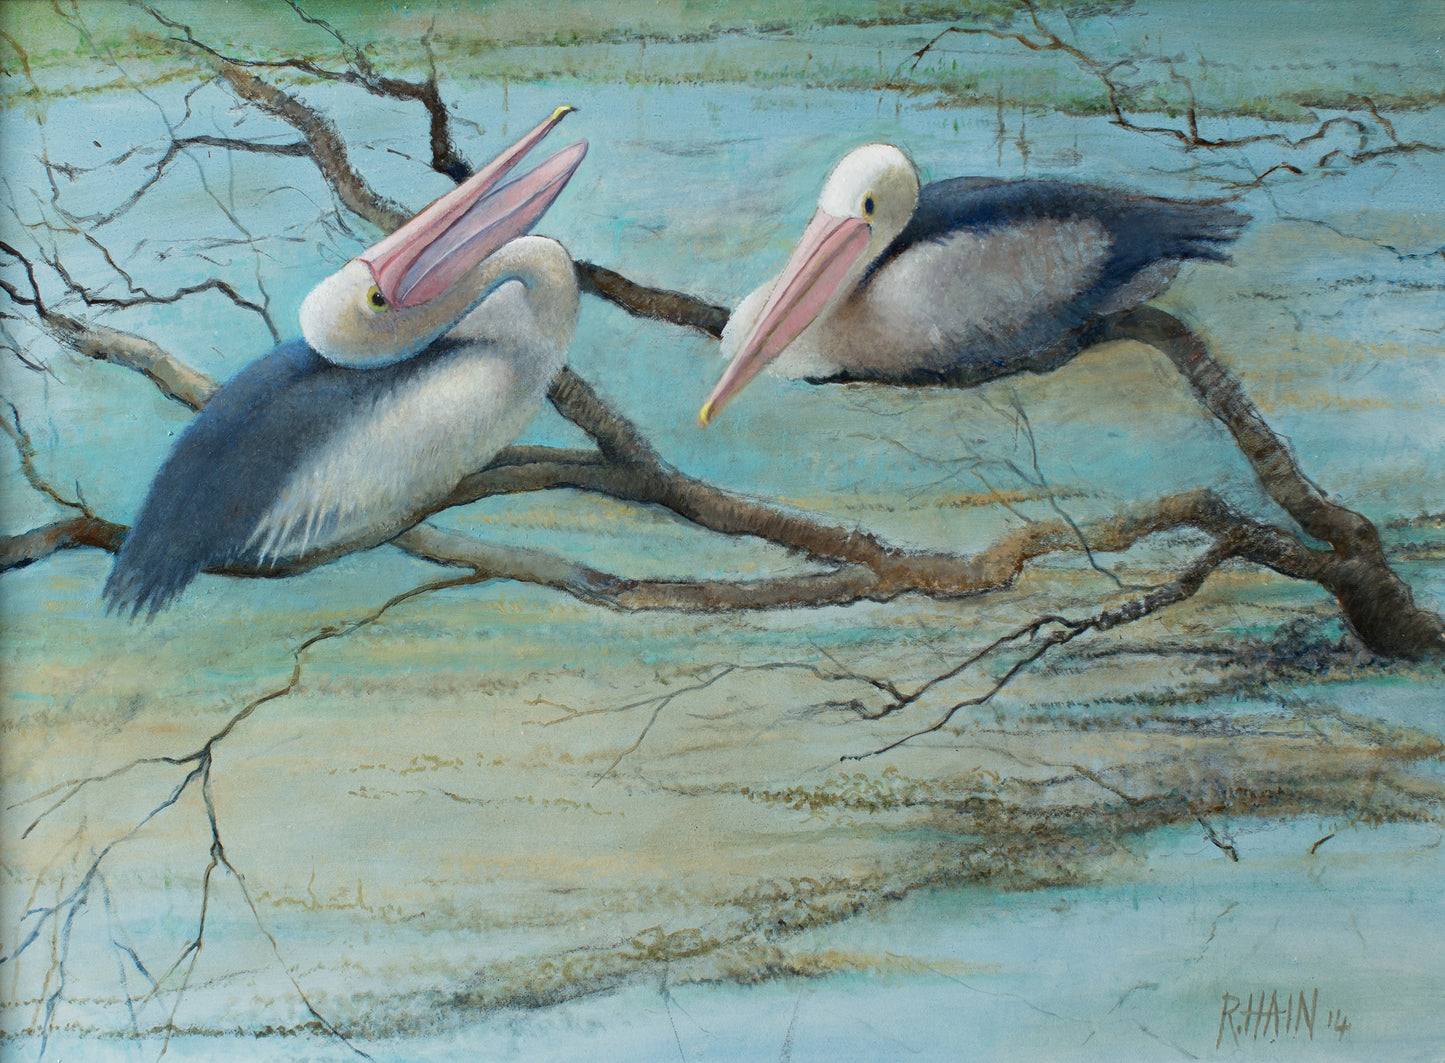 Rosemary Hain - Pelicans on a Log